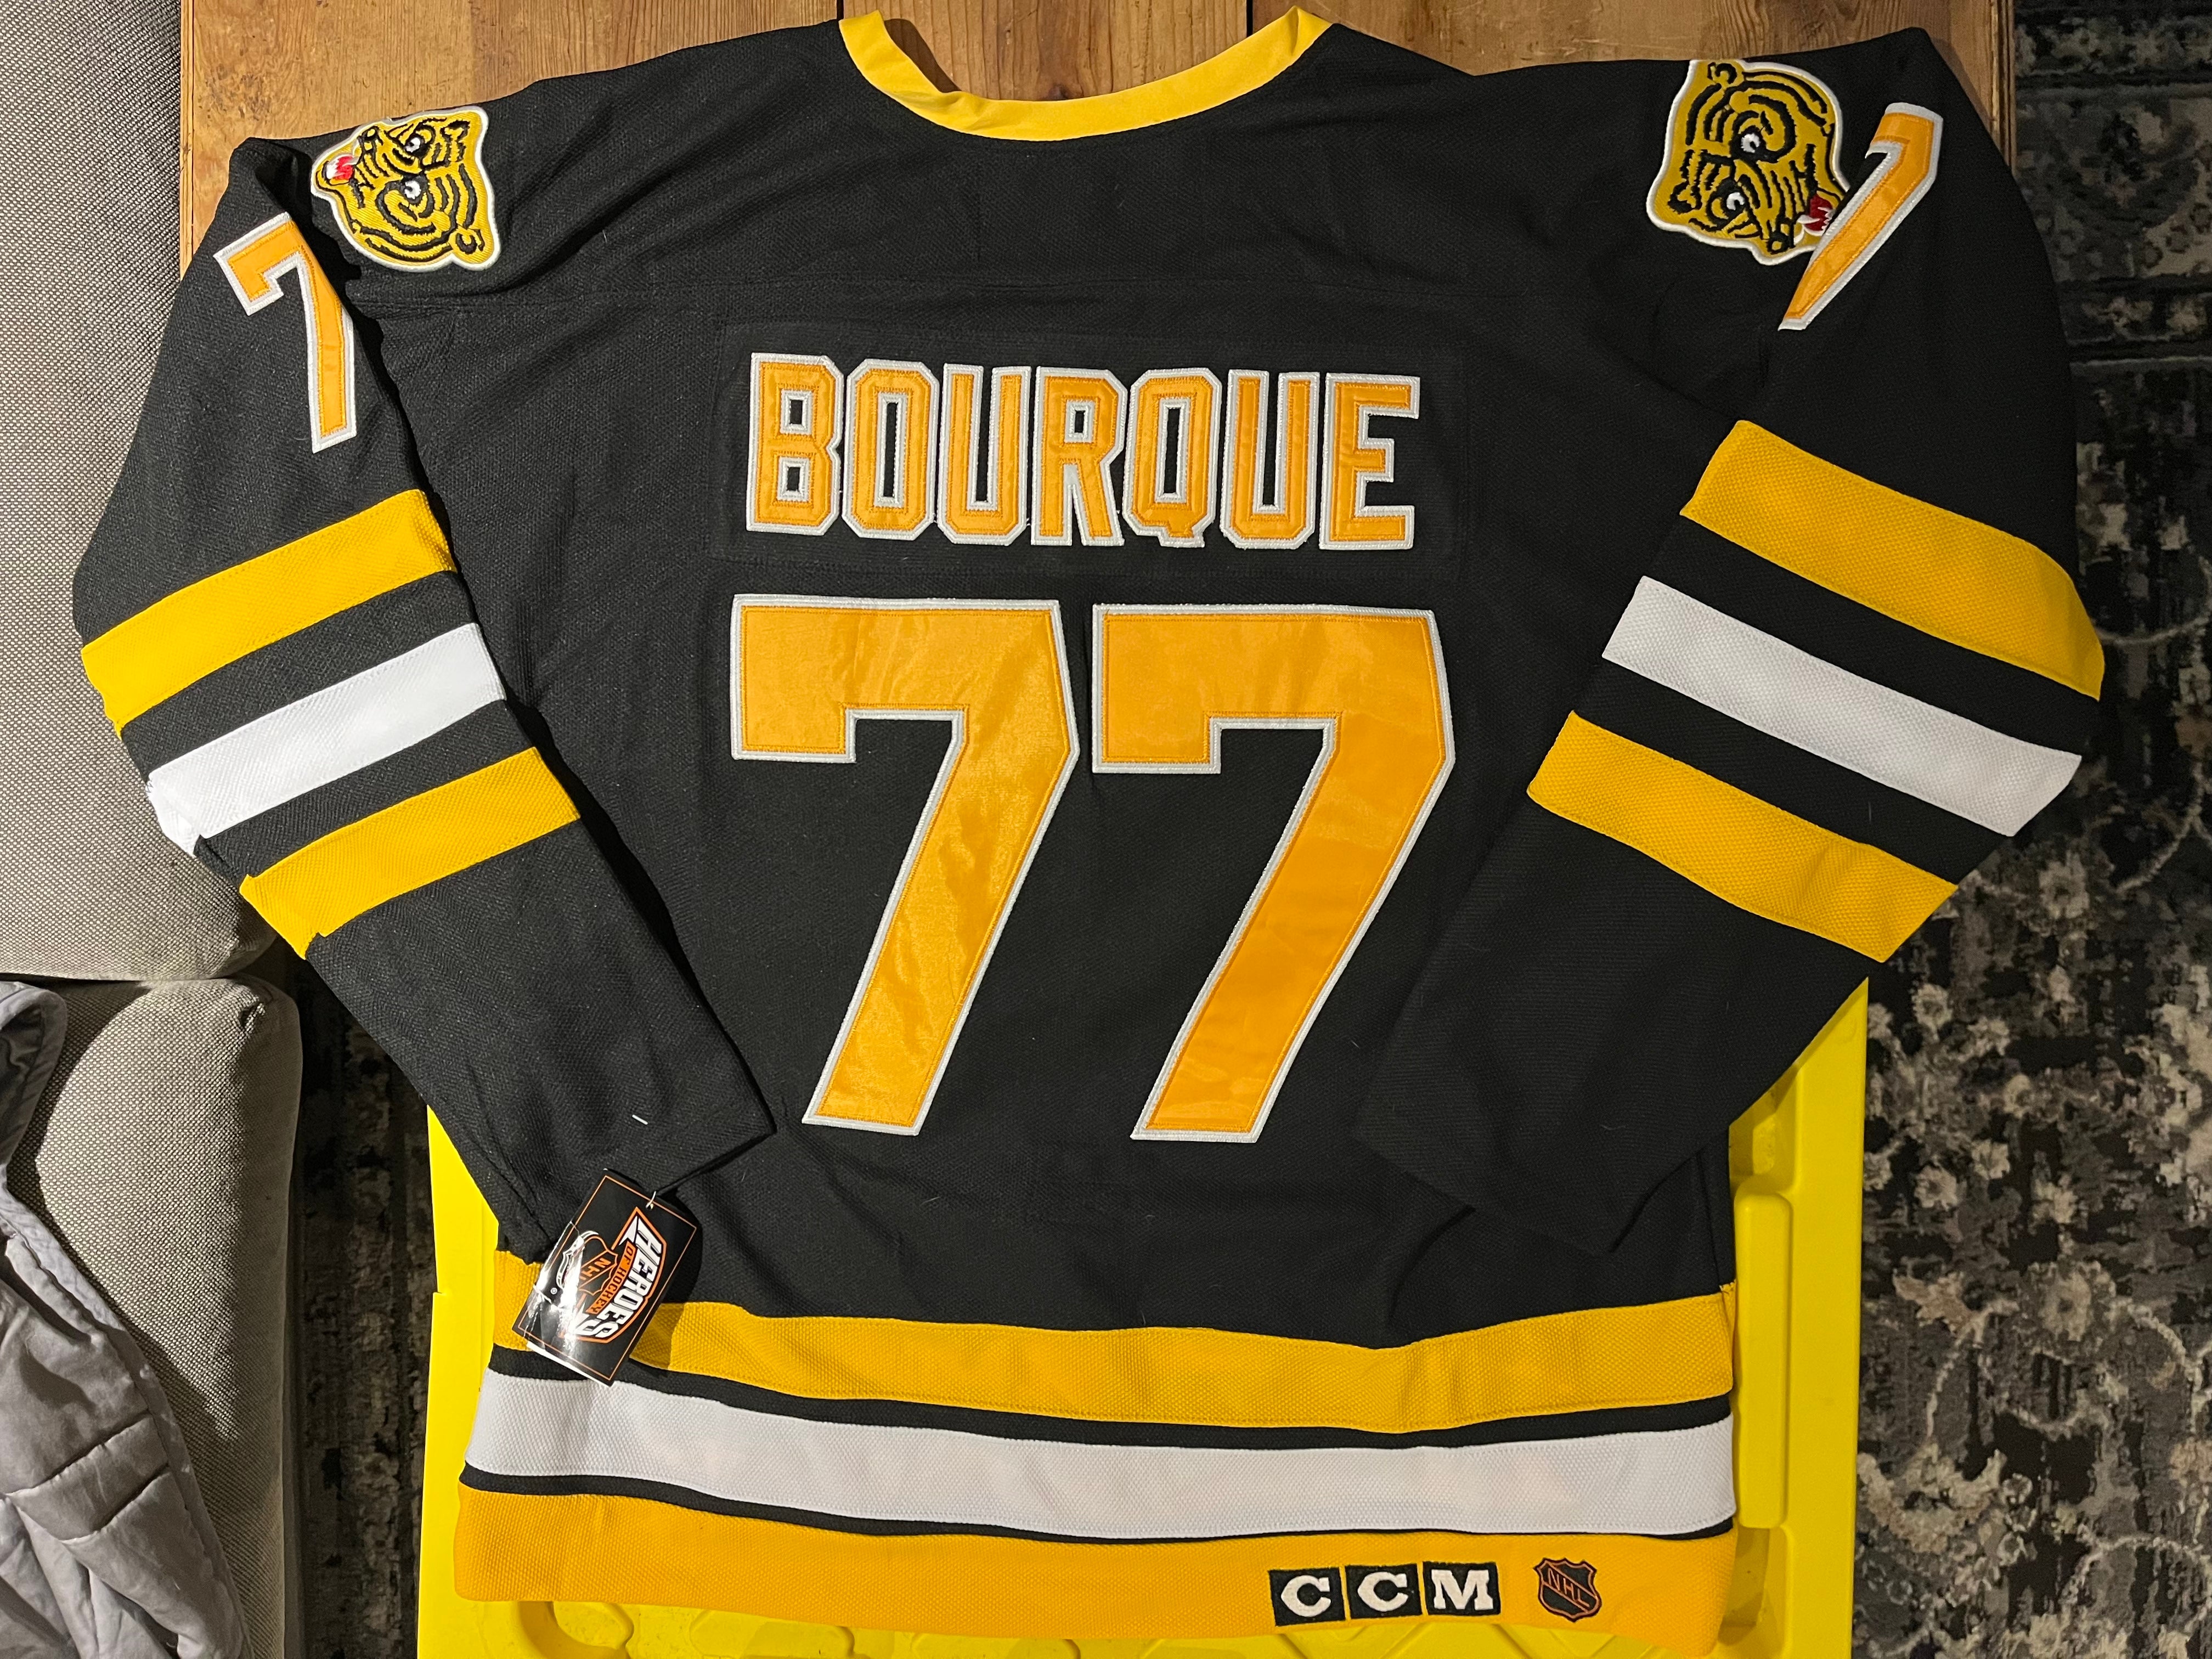 Men's Boston Bruins Ray Bourque Adidas Authentic Jersey - White